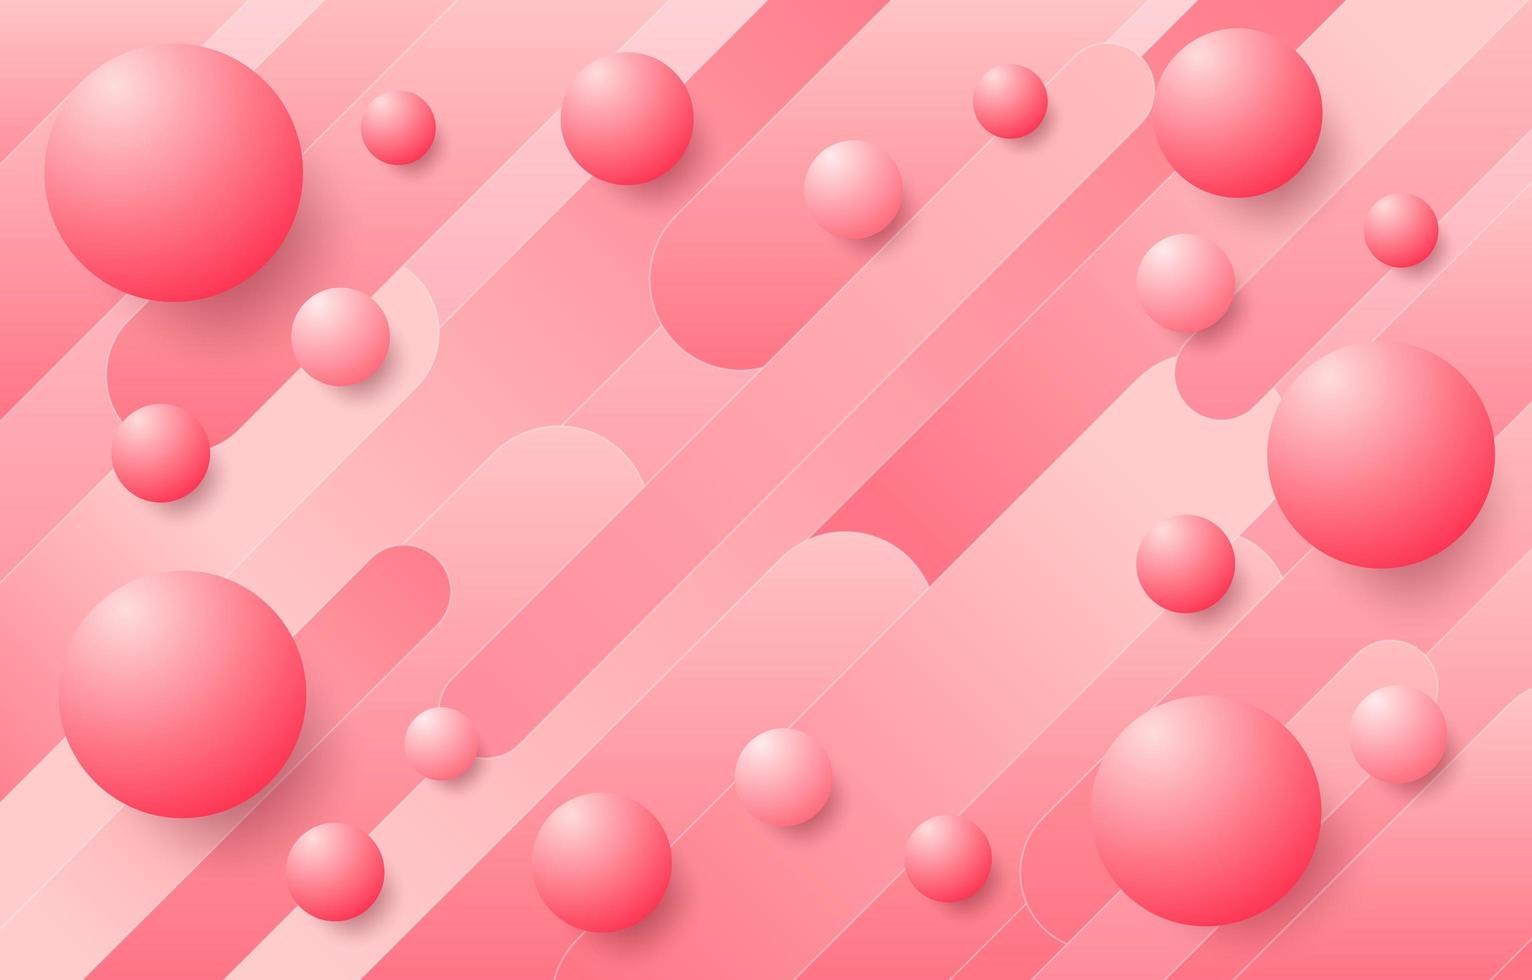 fondo de burbuja rosa vector